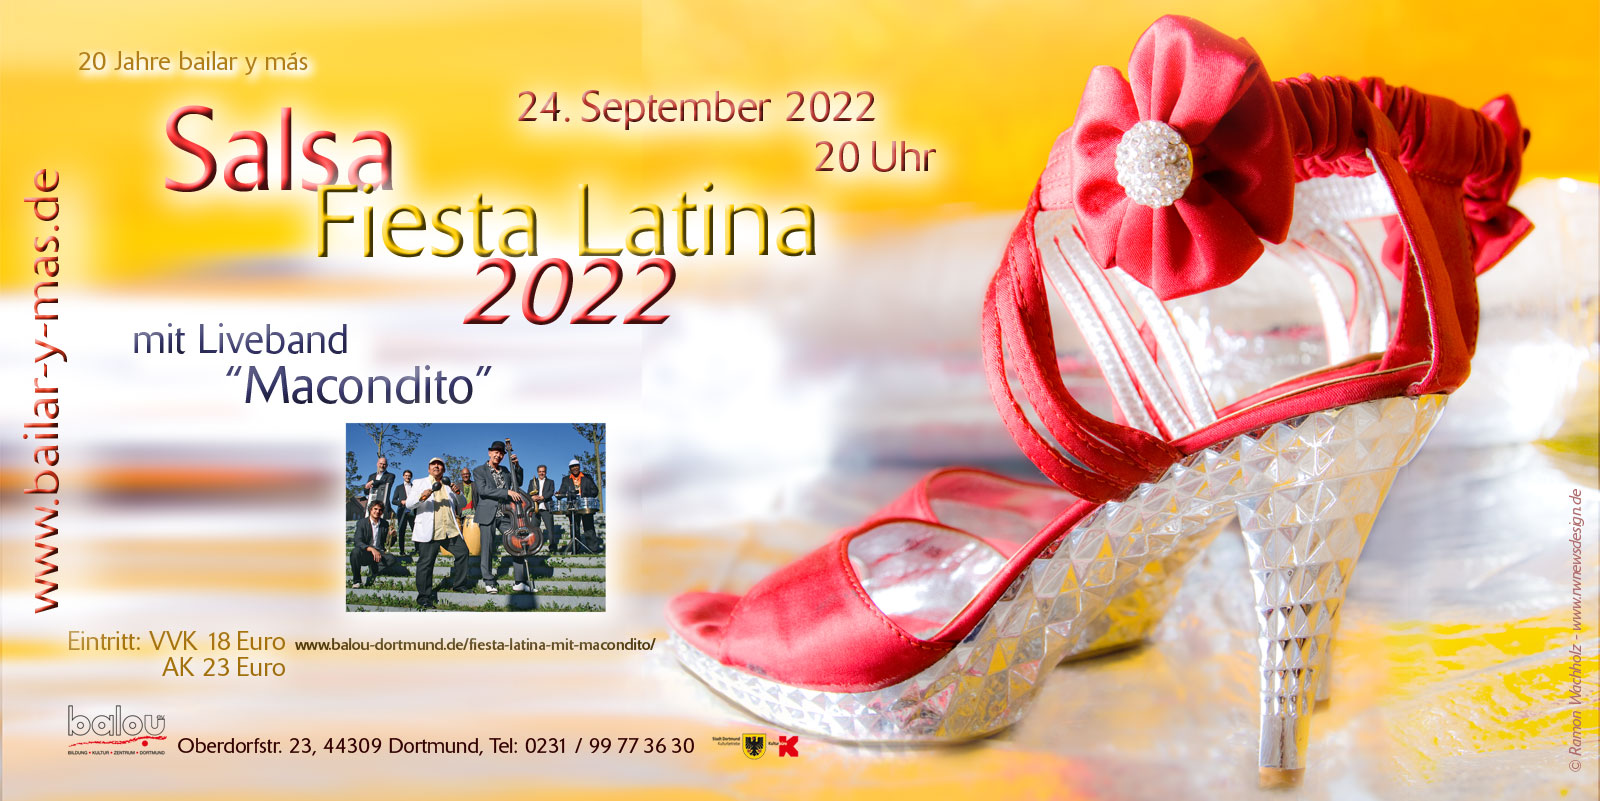 Fiesta Latina 2022 mit Liveband Macondito